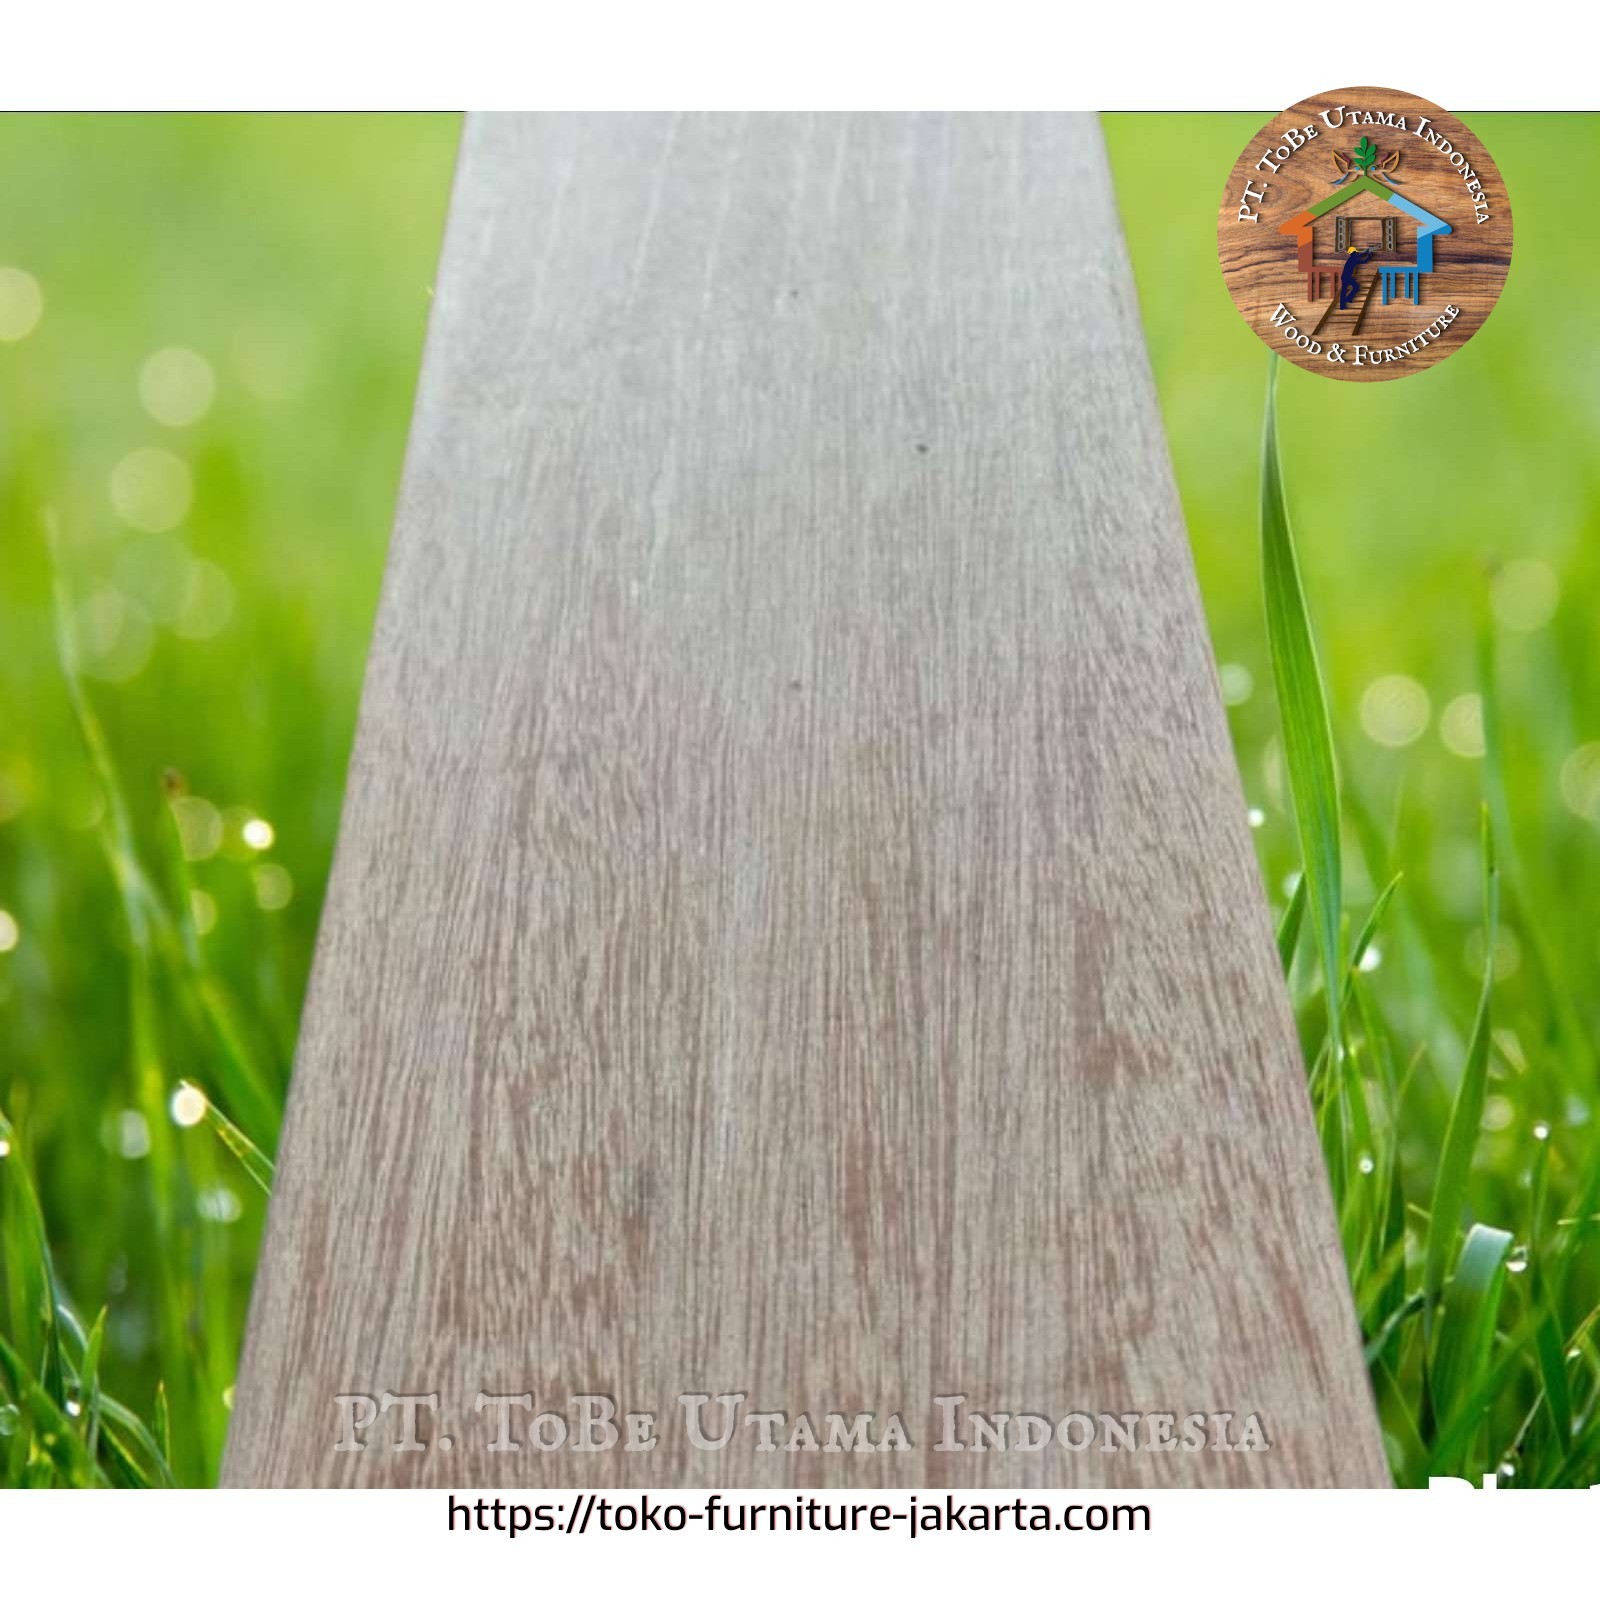 Planks & Decking/Flooring: Bengkirai Wood Plank made of teakwood (image 1 of 1).